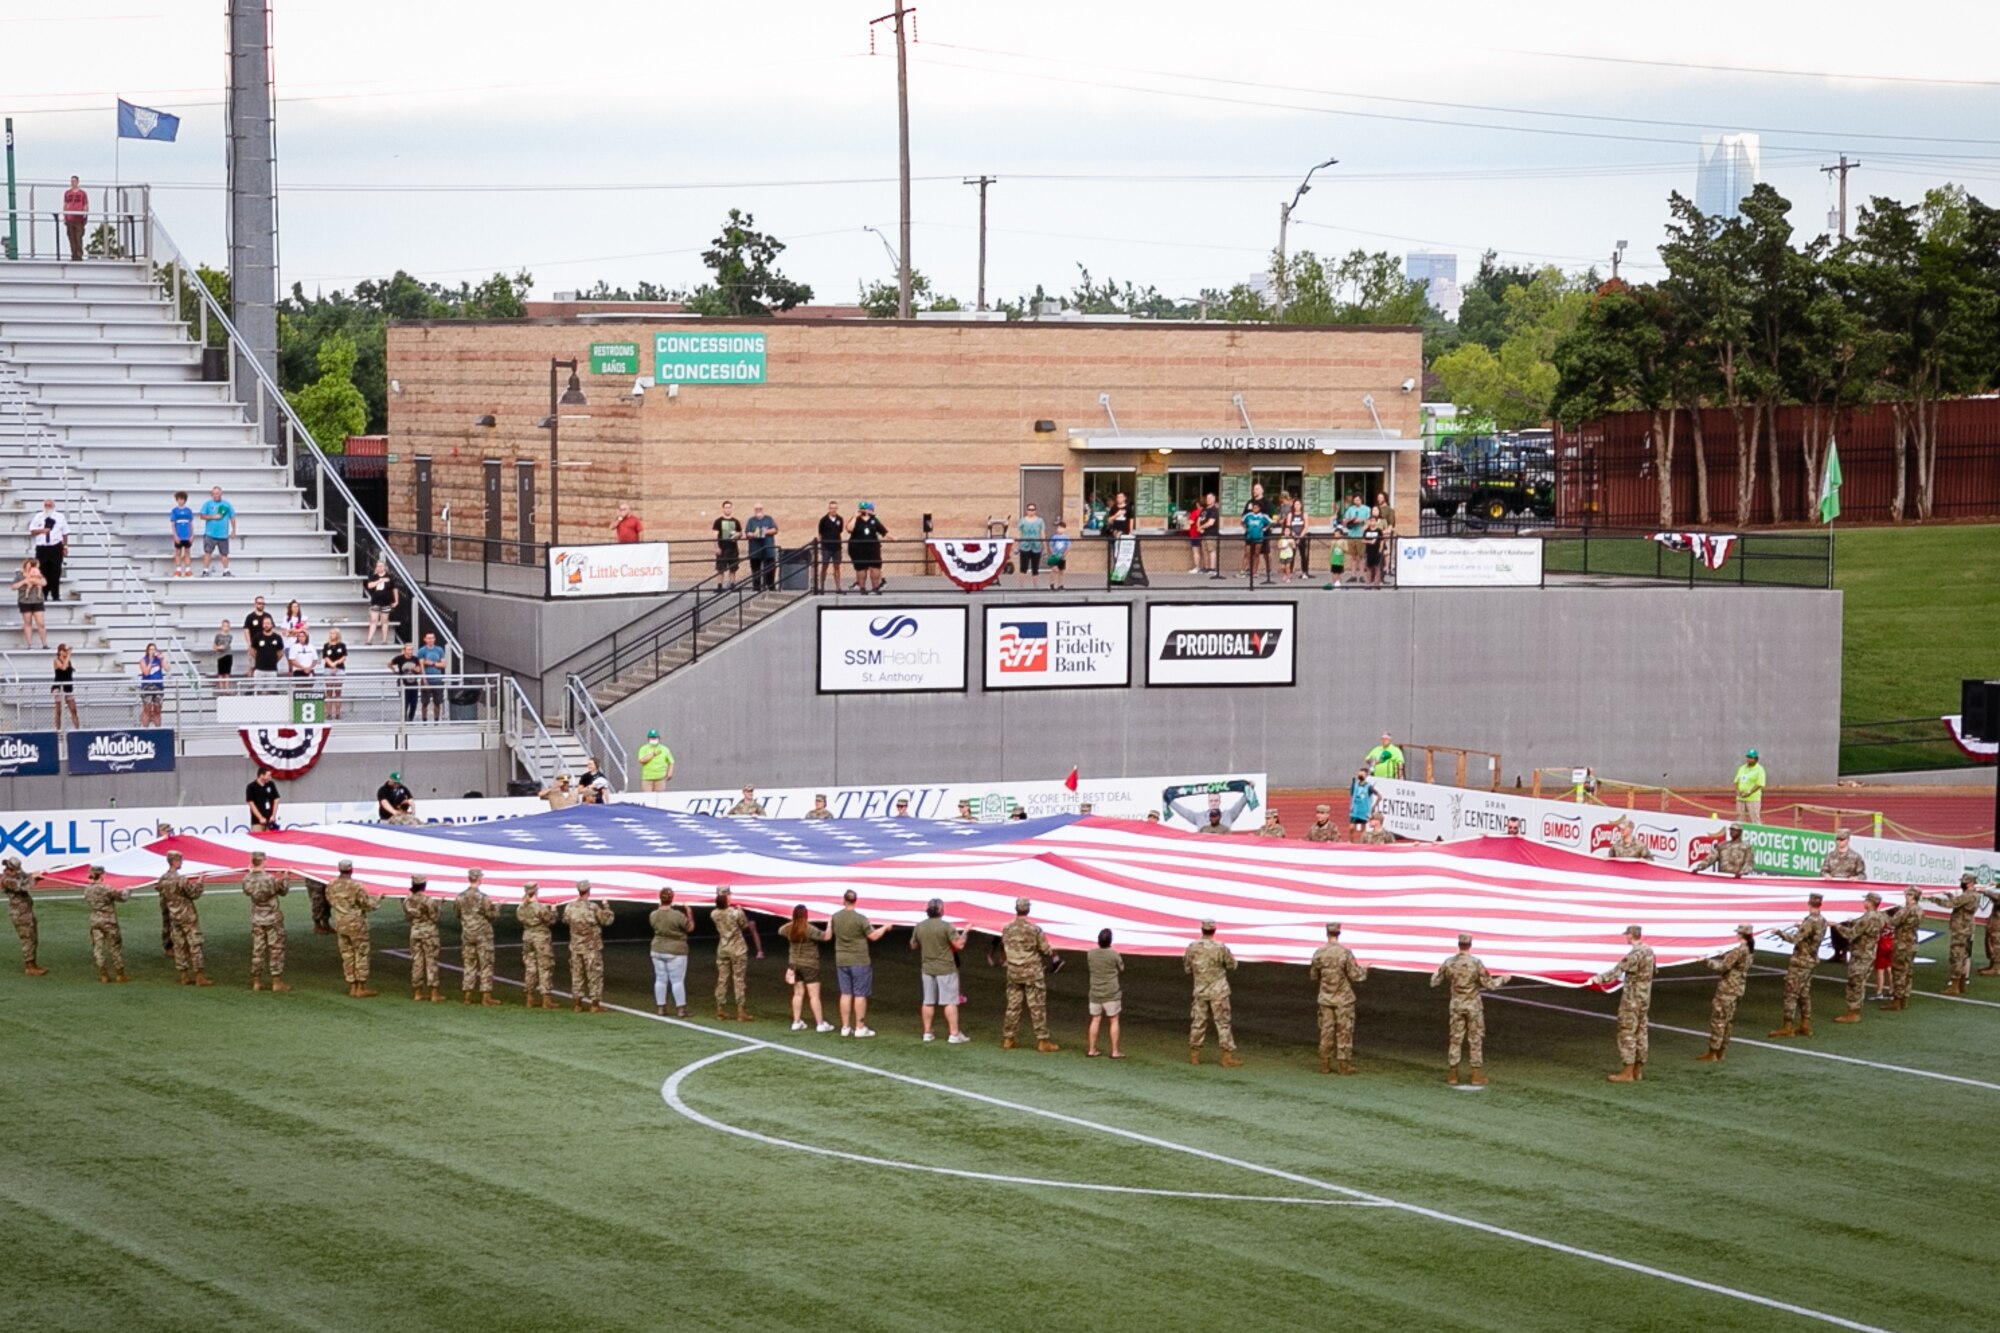 Airman unfurling large U.S. flag on soccer field.